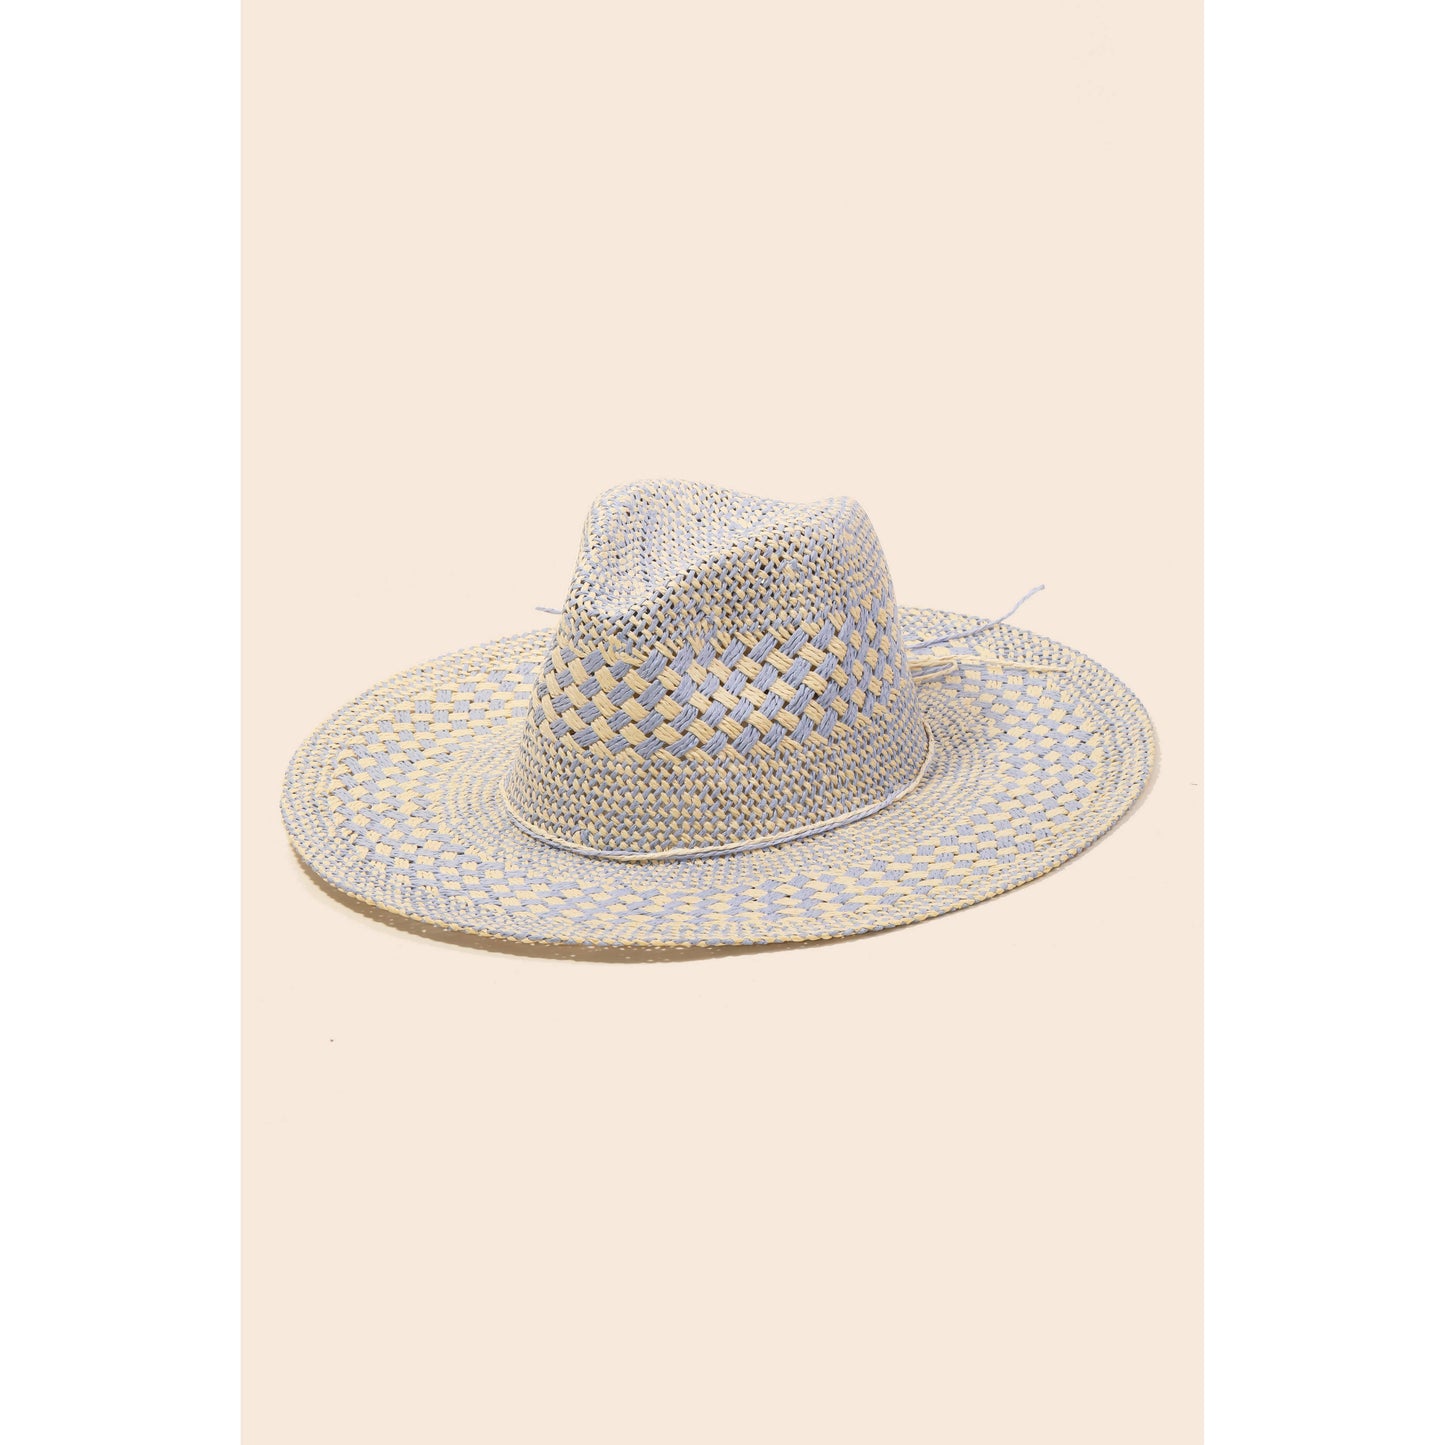 Anarchy Street - Checkered Straw Weave Sun Hat: FU